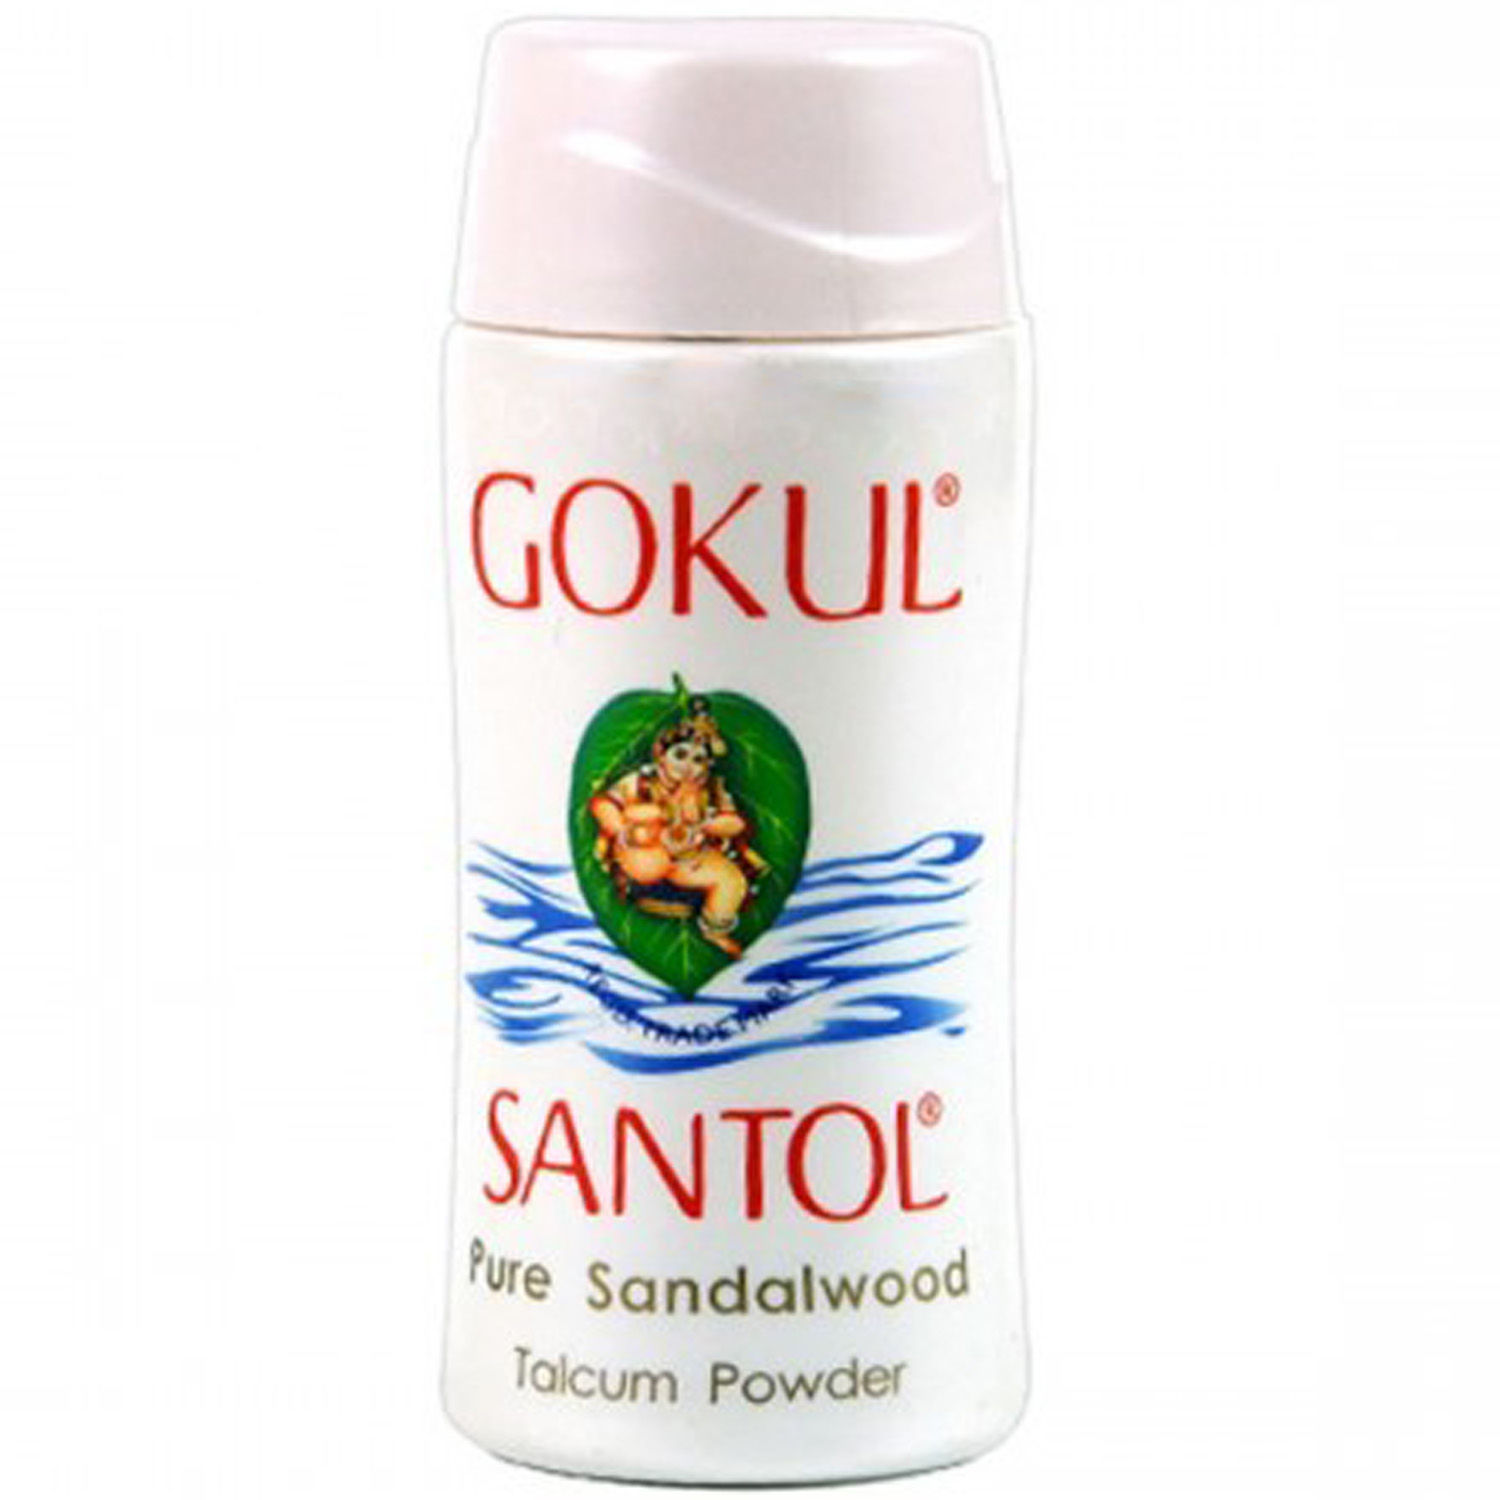 Buy Gokul Santol Sandalwood Talcum Powder, 30 gm Online